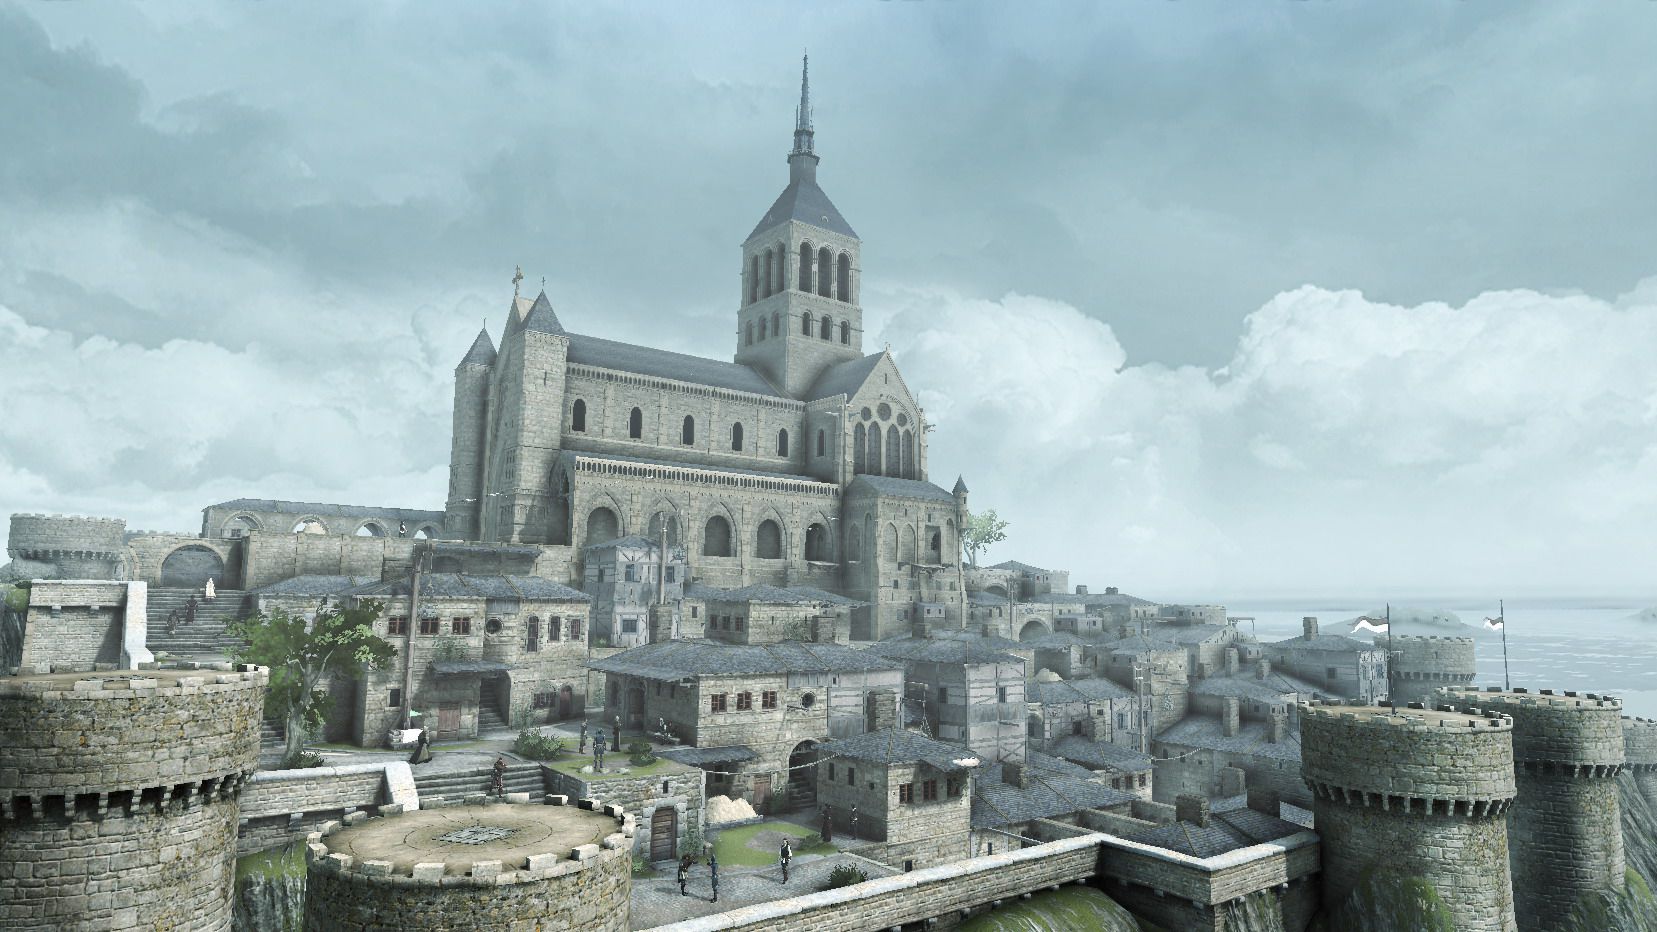 AssassinÂ’s Creed Brotherhood - Animus Project Update 1.0 DLC - Image 2